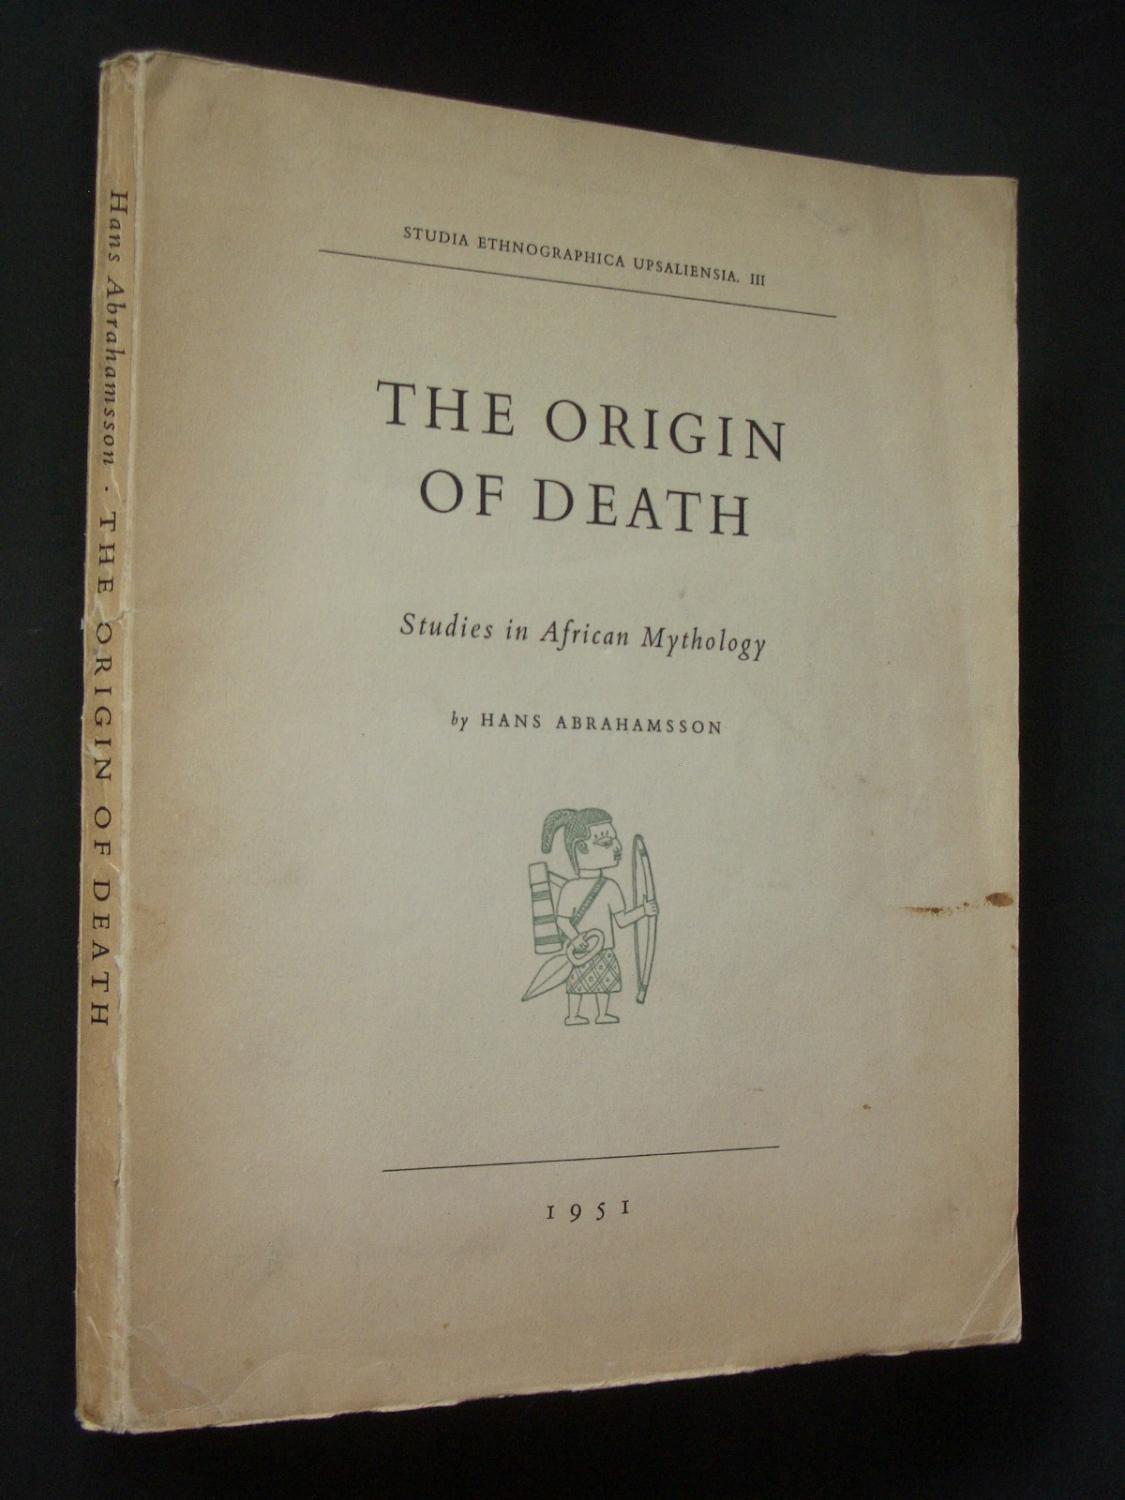 The Origin of Death: Studies in African Mythology par Abrahamsson, Hans ...